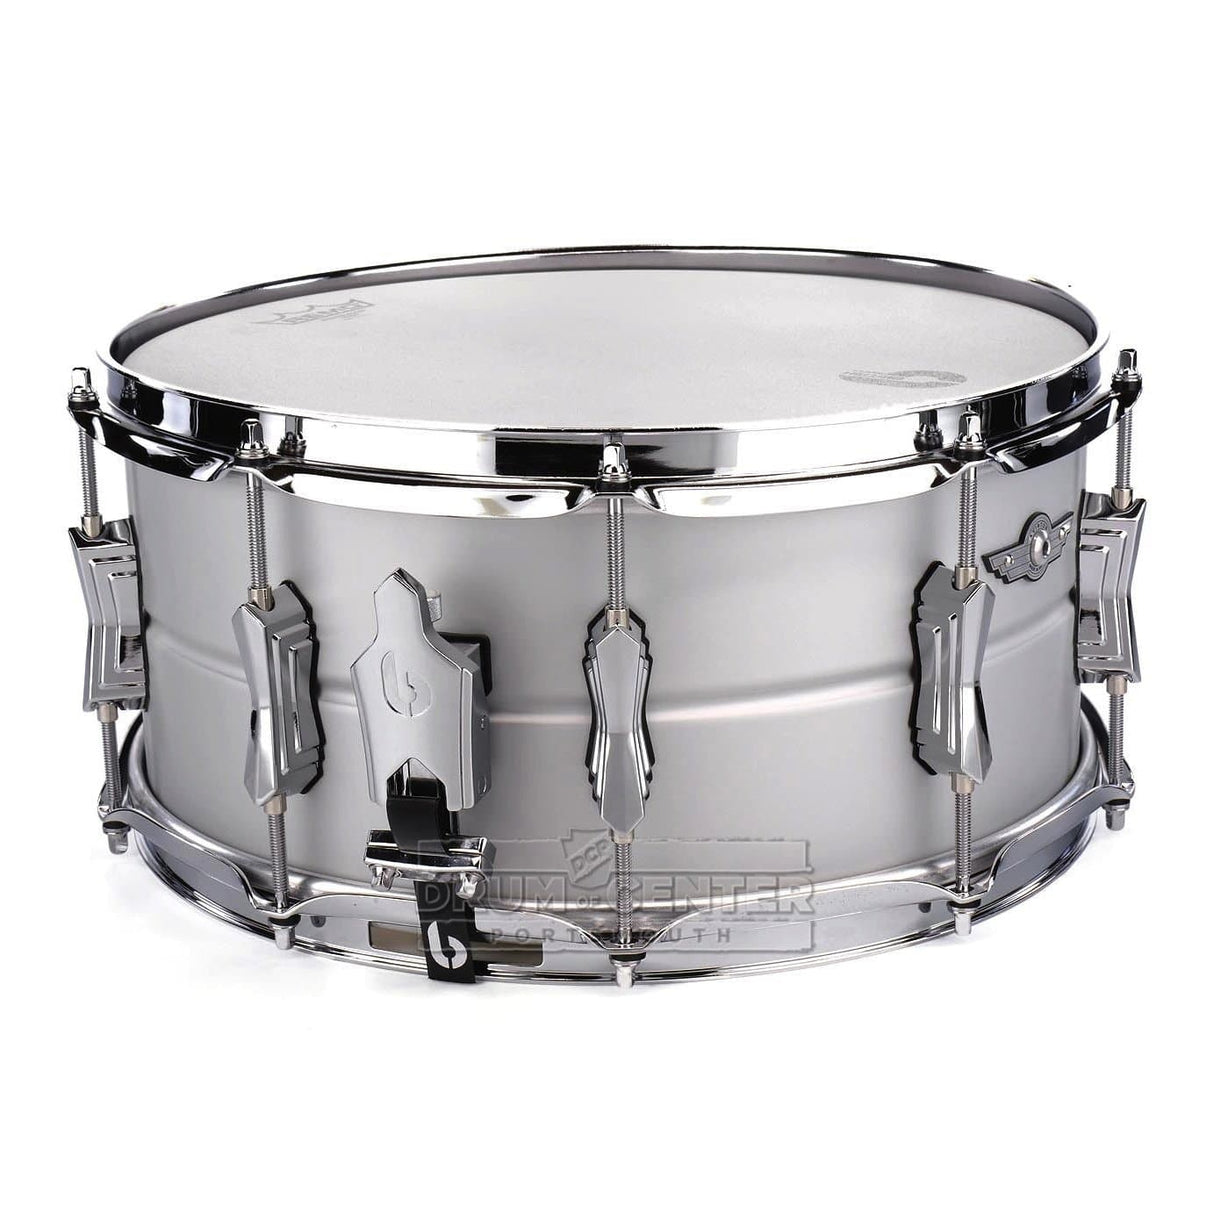 British Drum Company Aviator Snare Drum 14x6.5